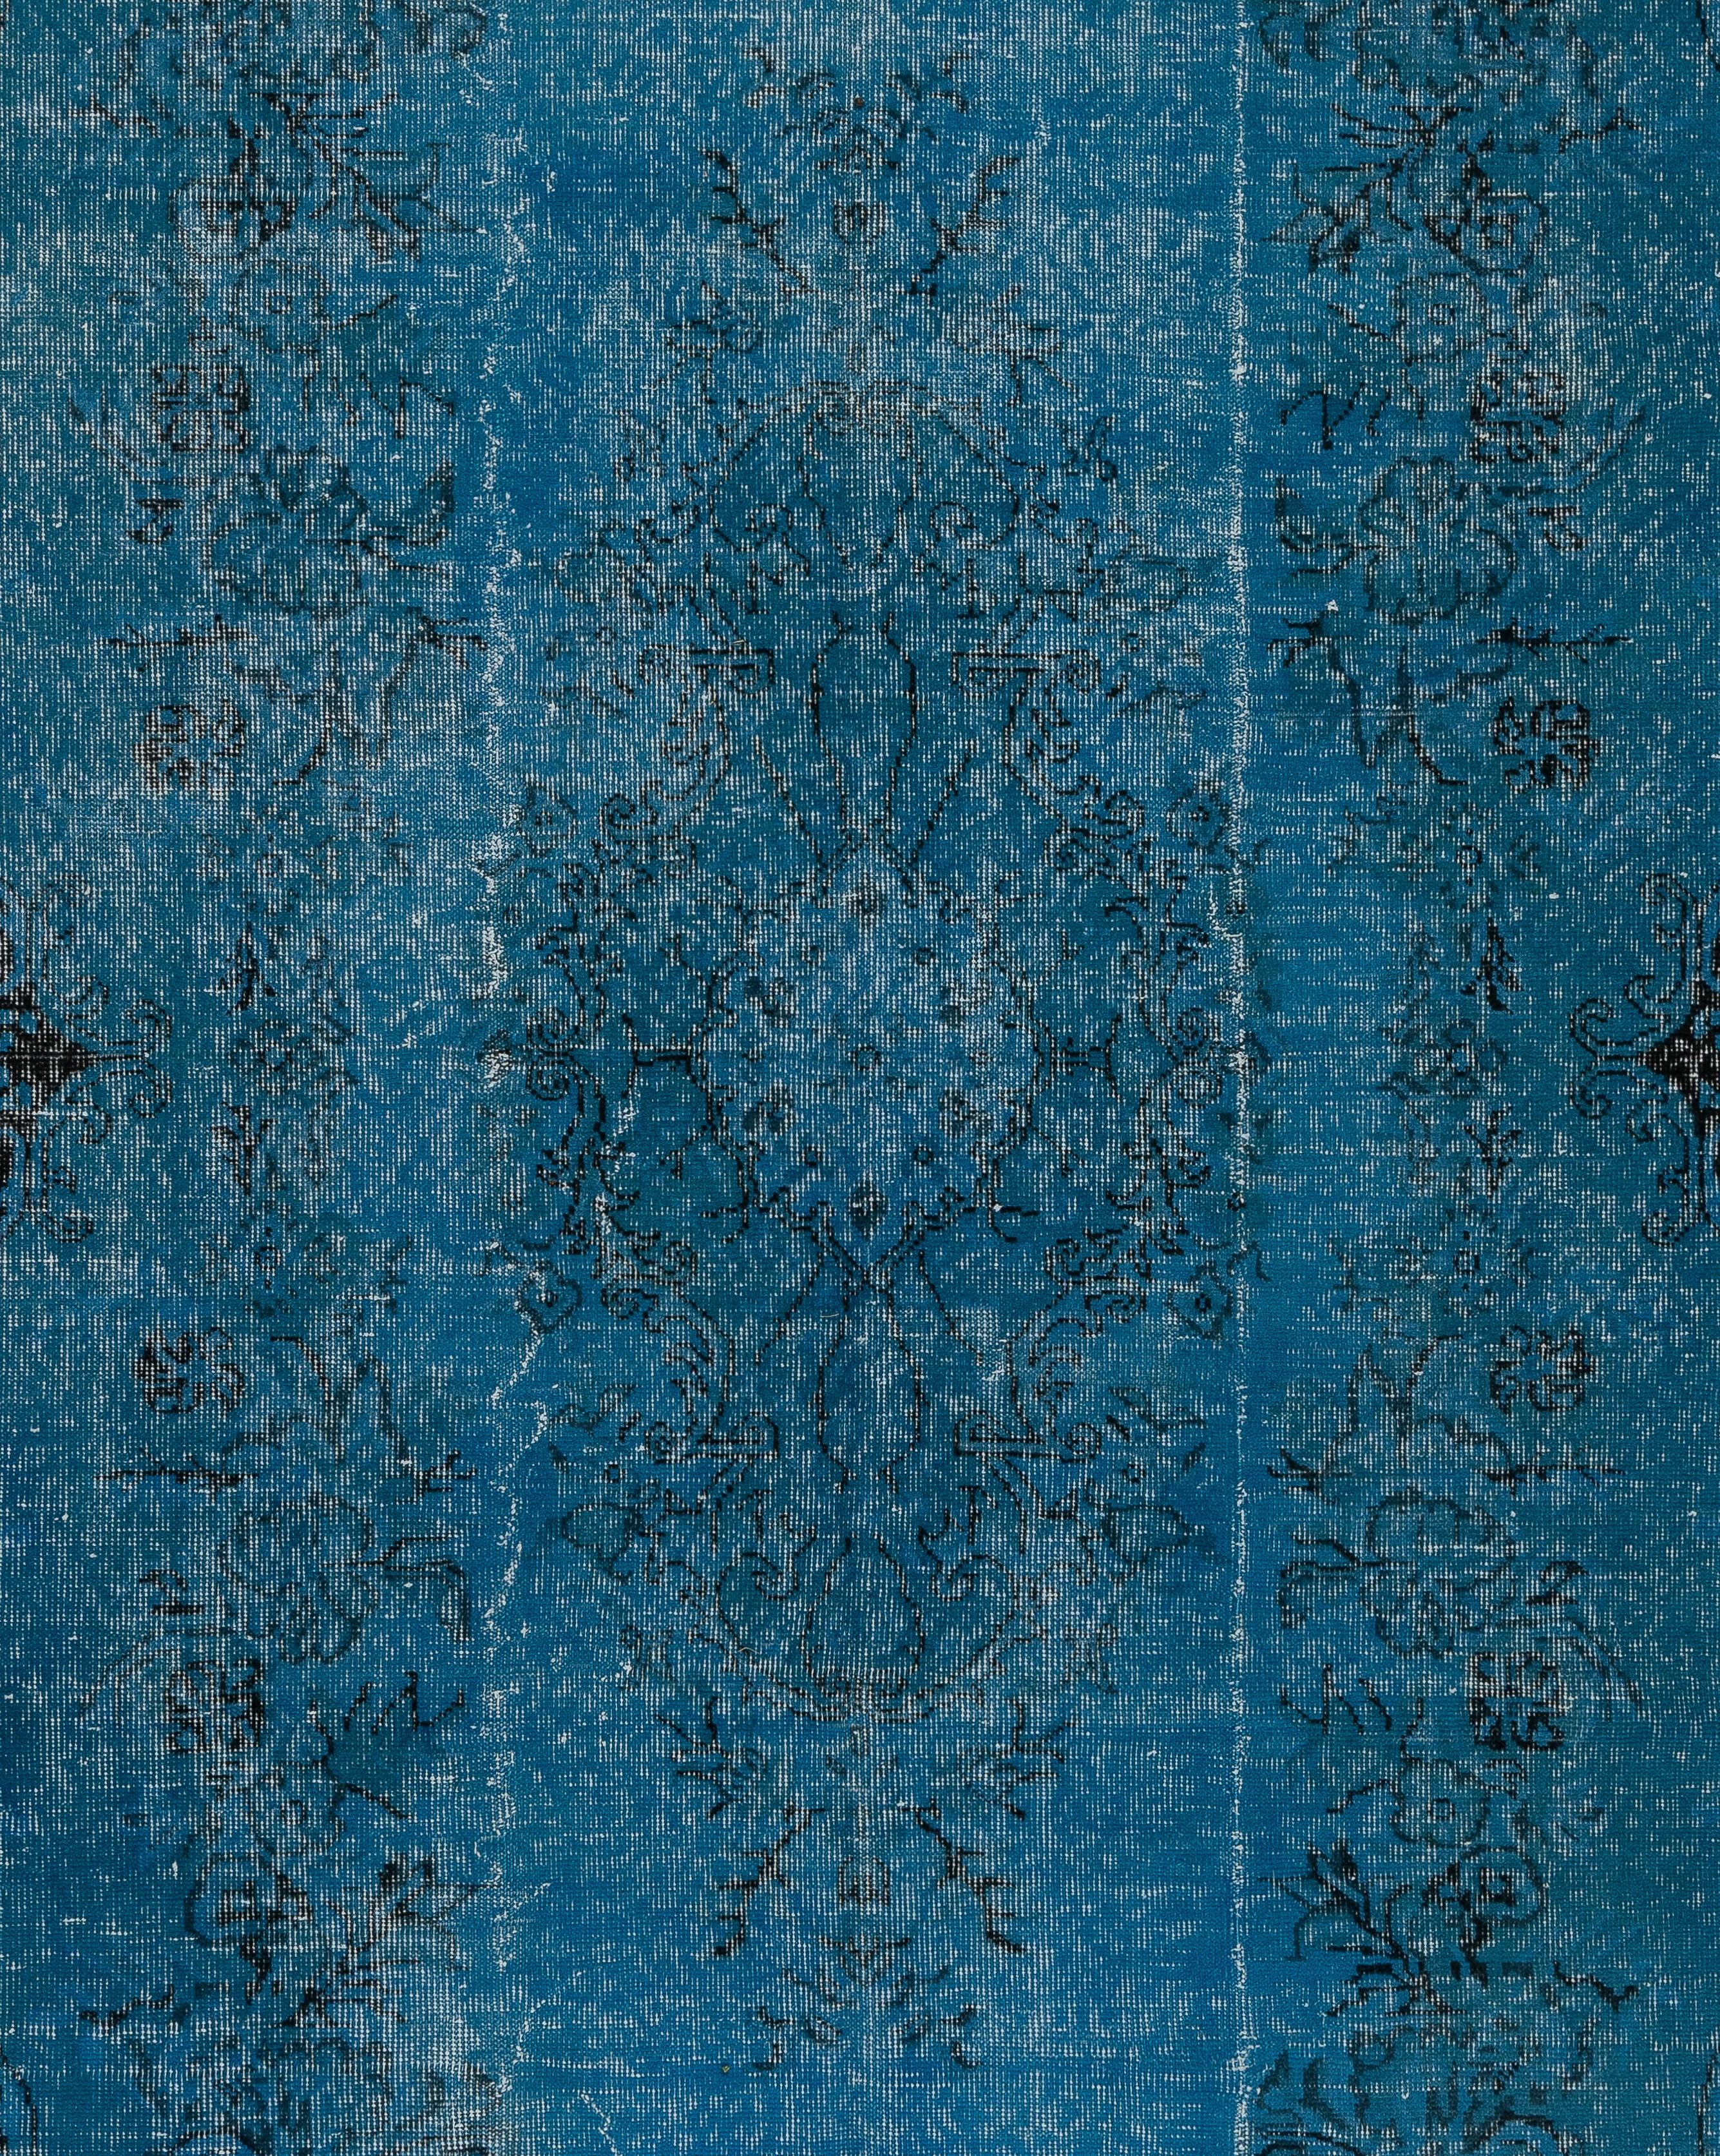 Cotton 6.2x9.4 ft Indigo Blue Vintage Area Rug, Hand-Knotted Baroque Design Carpet For Sale